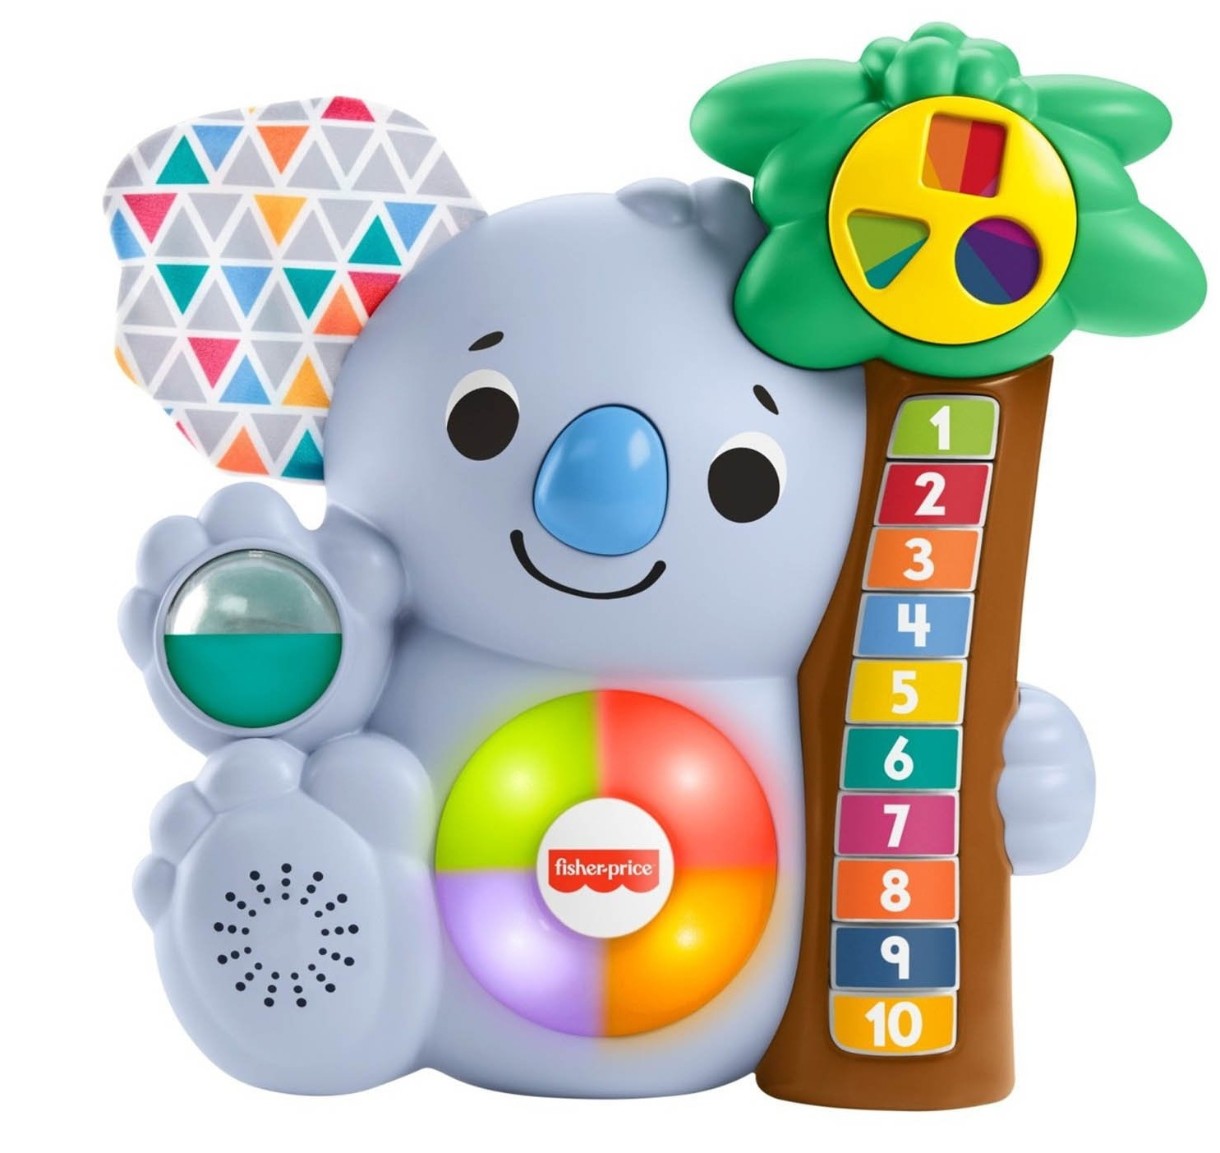 Интерактивная игрушка Fisher Price Linkimals Koala (GRG60)  